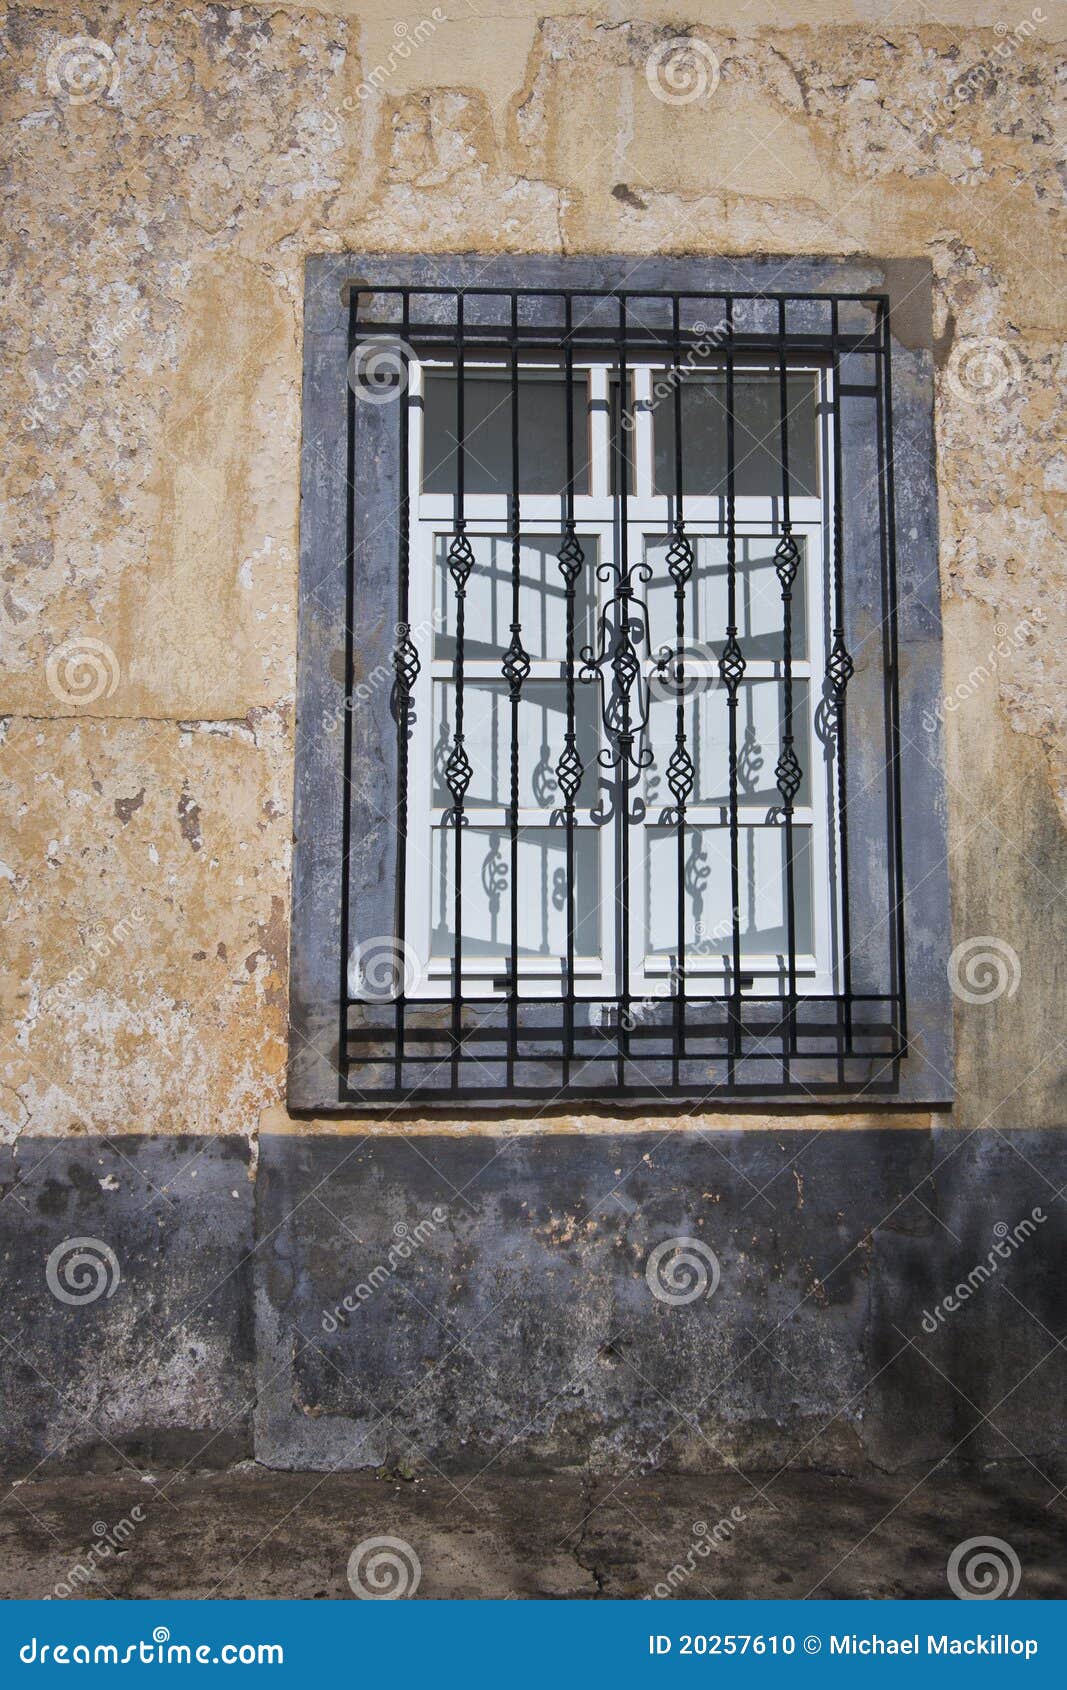 Wrought Iron Window Grille Stock Photo - Image: 20257610